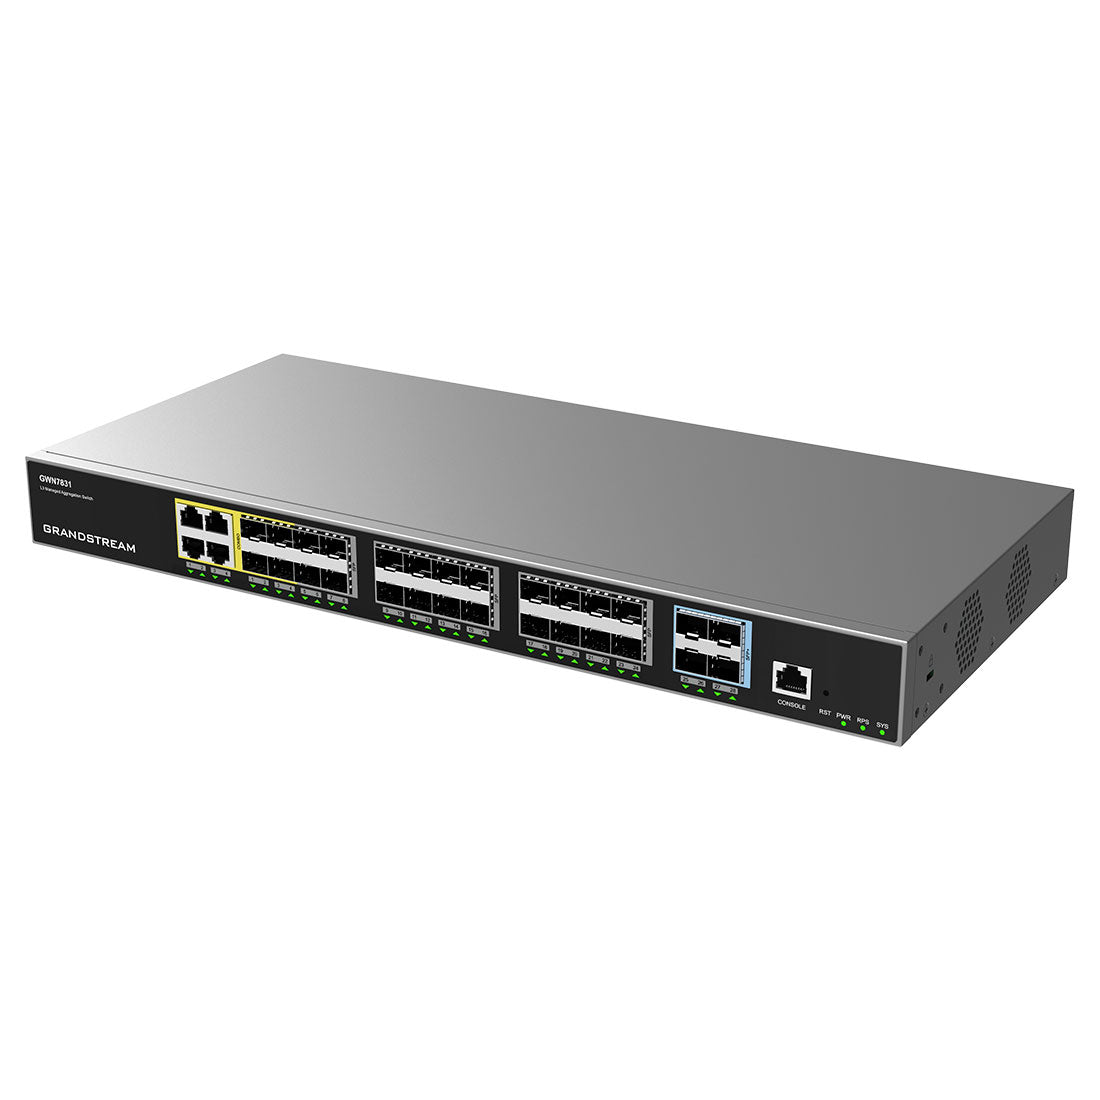 GWN7831 - Conectividad Empresarial de Alto Rendimiento capa 3, 4 x Combo, 24 x Giga SFP, 4 x 10 Giga SFP+